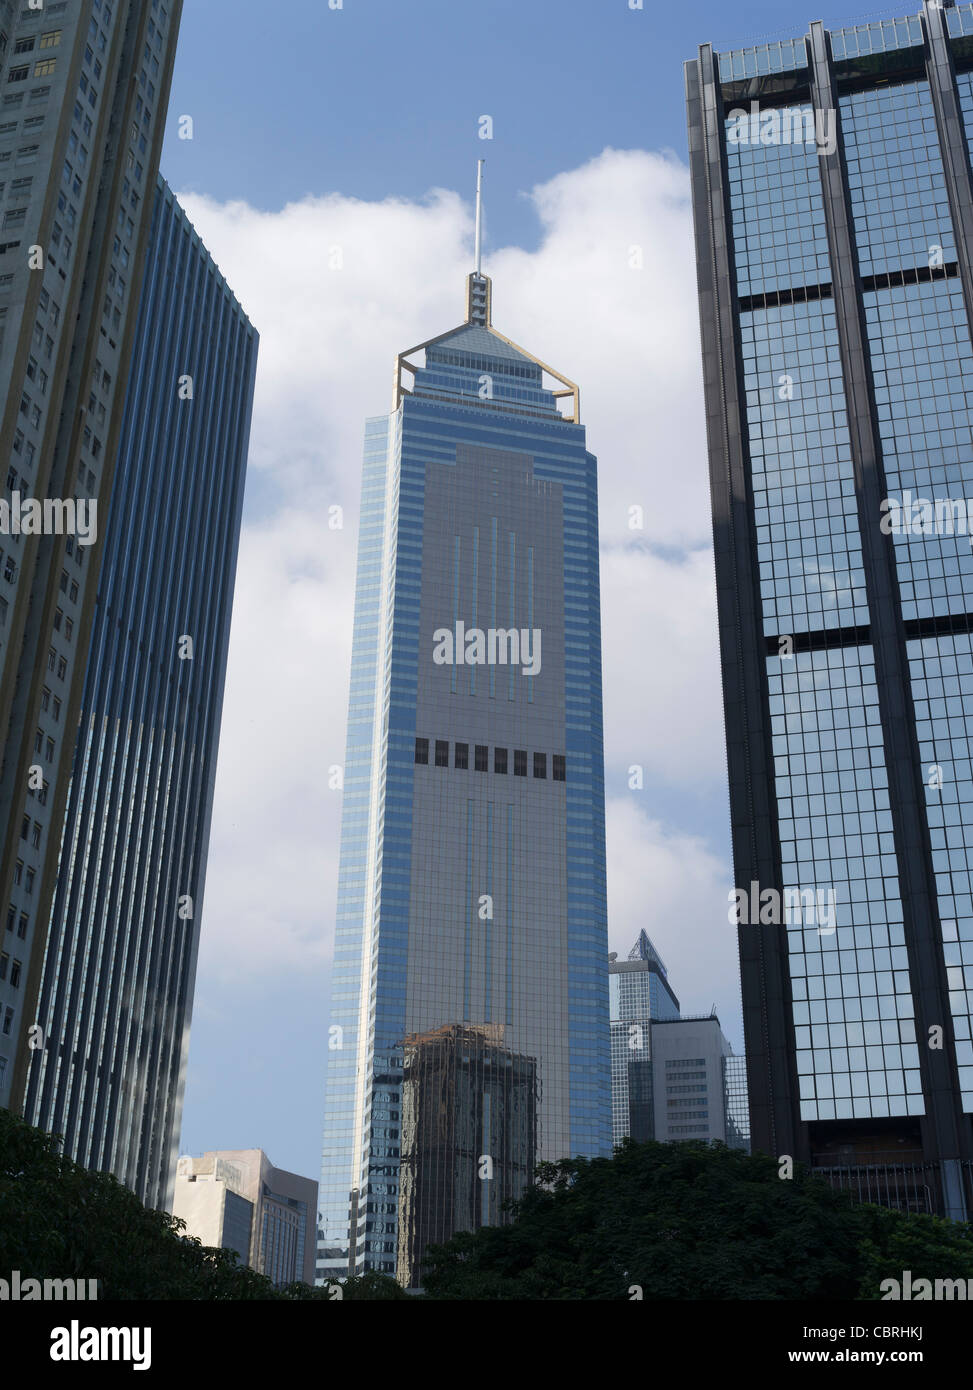 dh Central Plaza Tower WAN CHAI HONG KONG Skyscraper building wanchai china modern architecture block Stock Photo